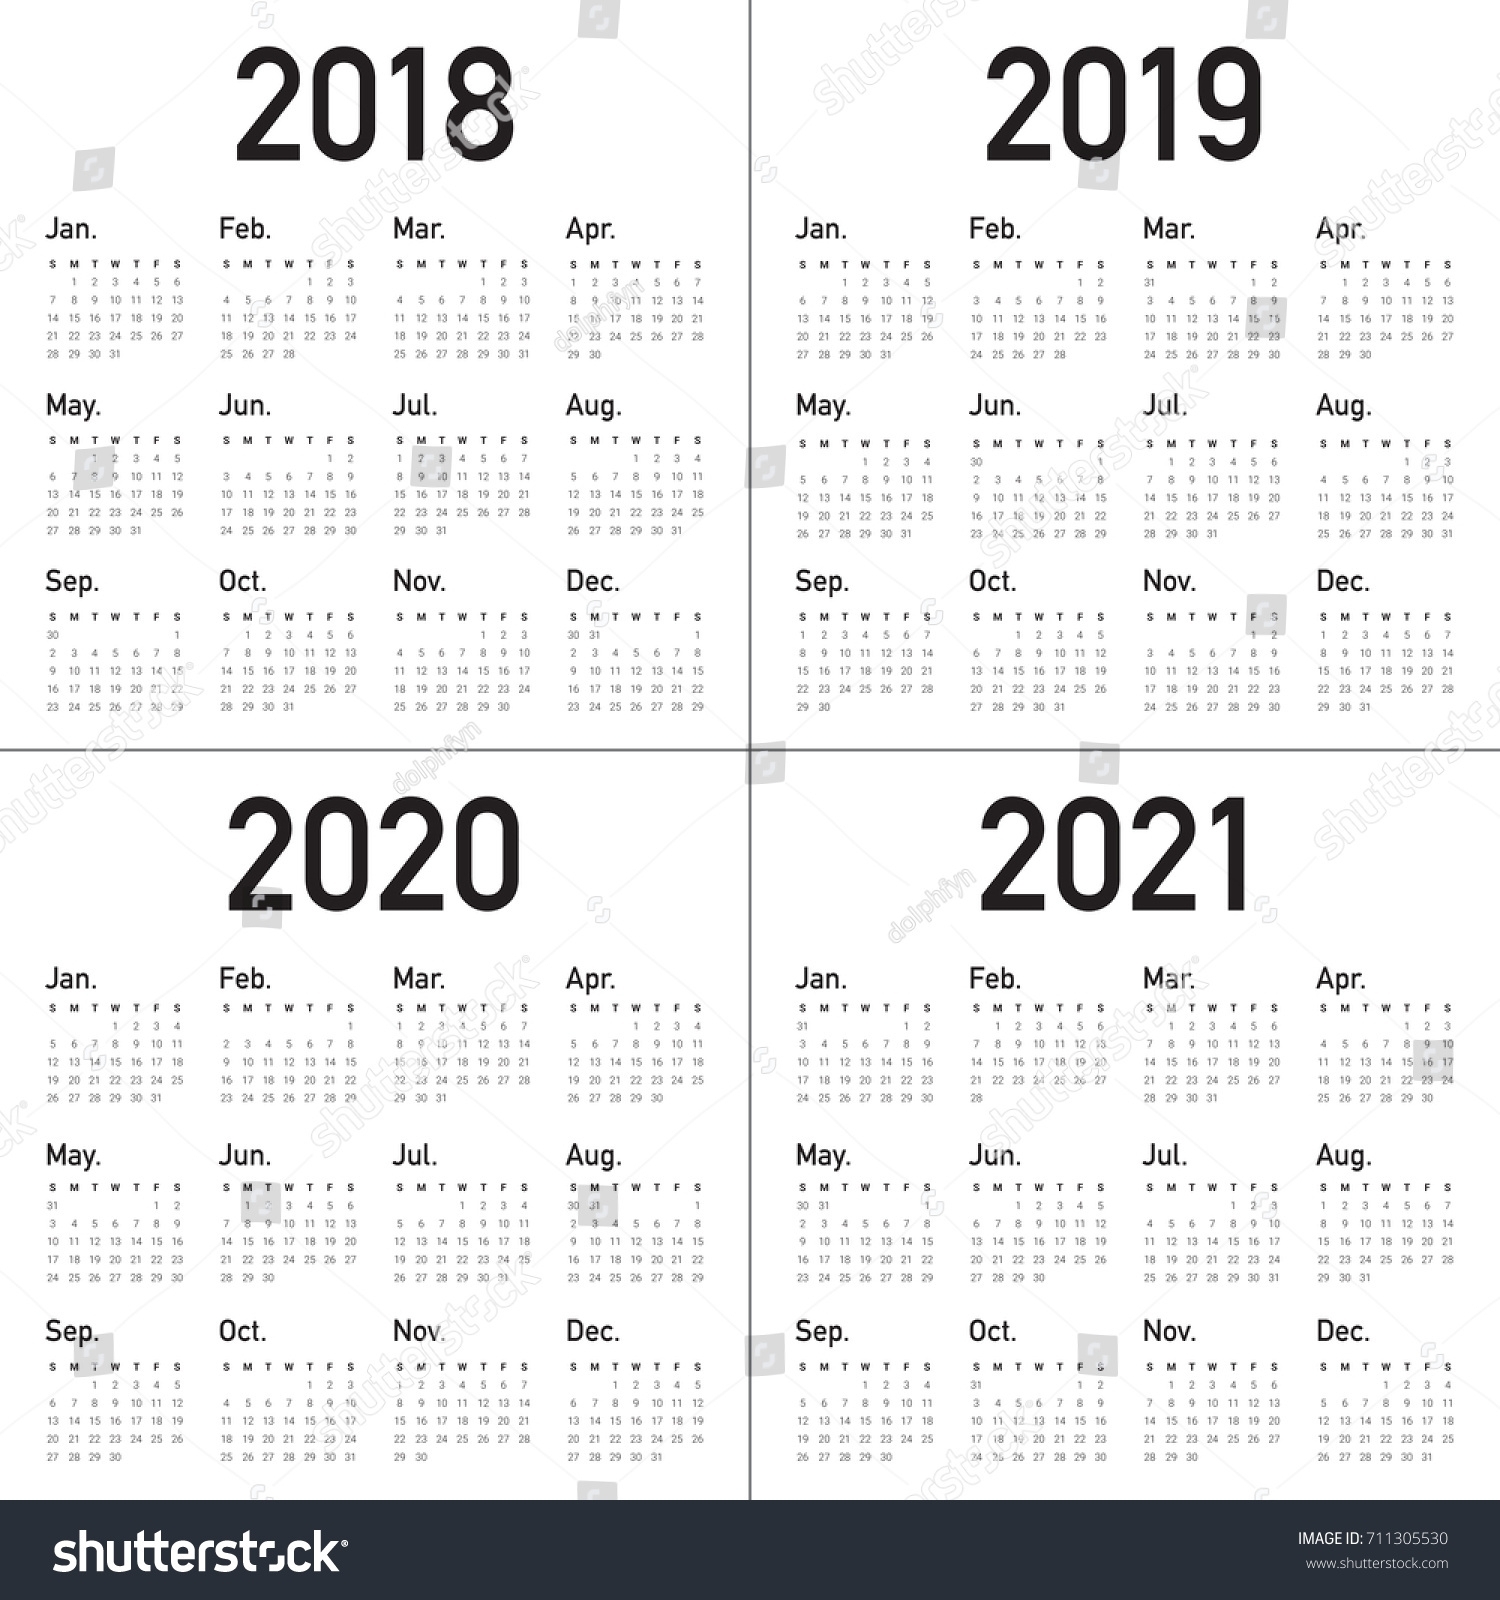 Printable 3 Year Calendar 2019 To 2021 | Printable Calendar 2019 3 regarding Three Year Calendar 2019 2020 2021